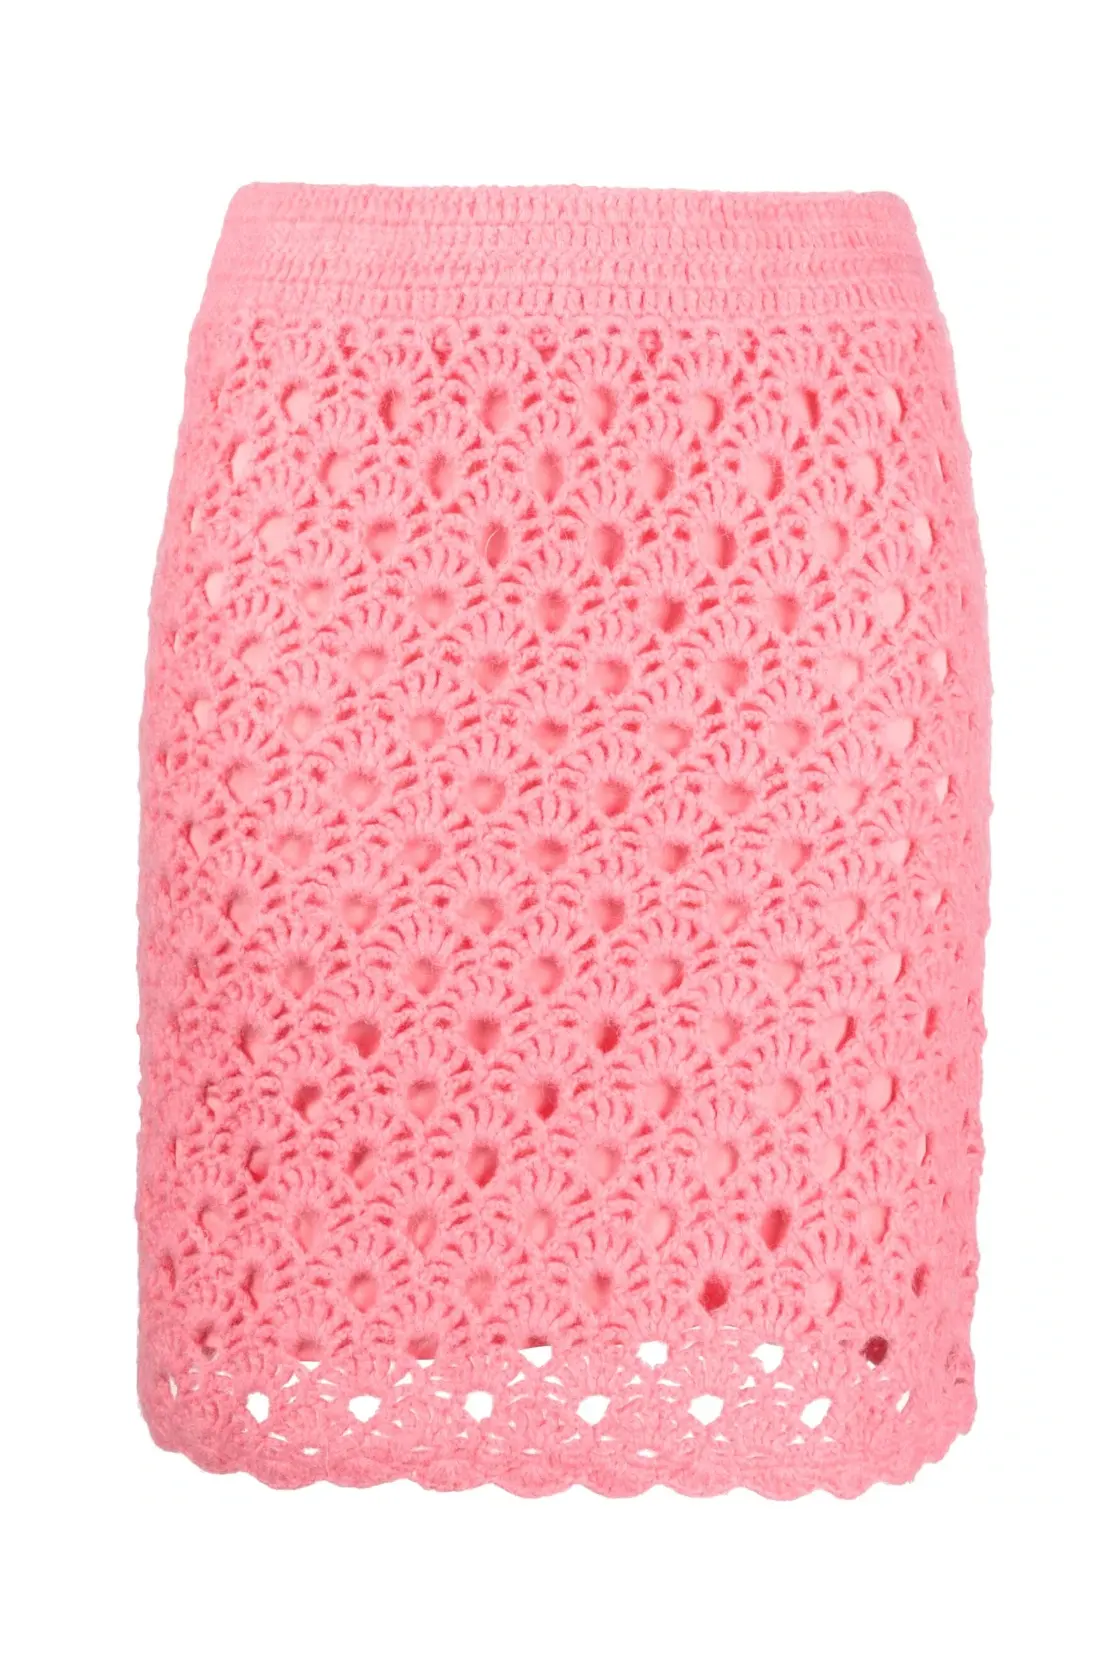 Coira knitted crochet skirt, pink